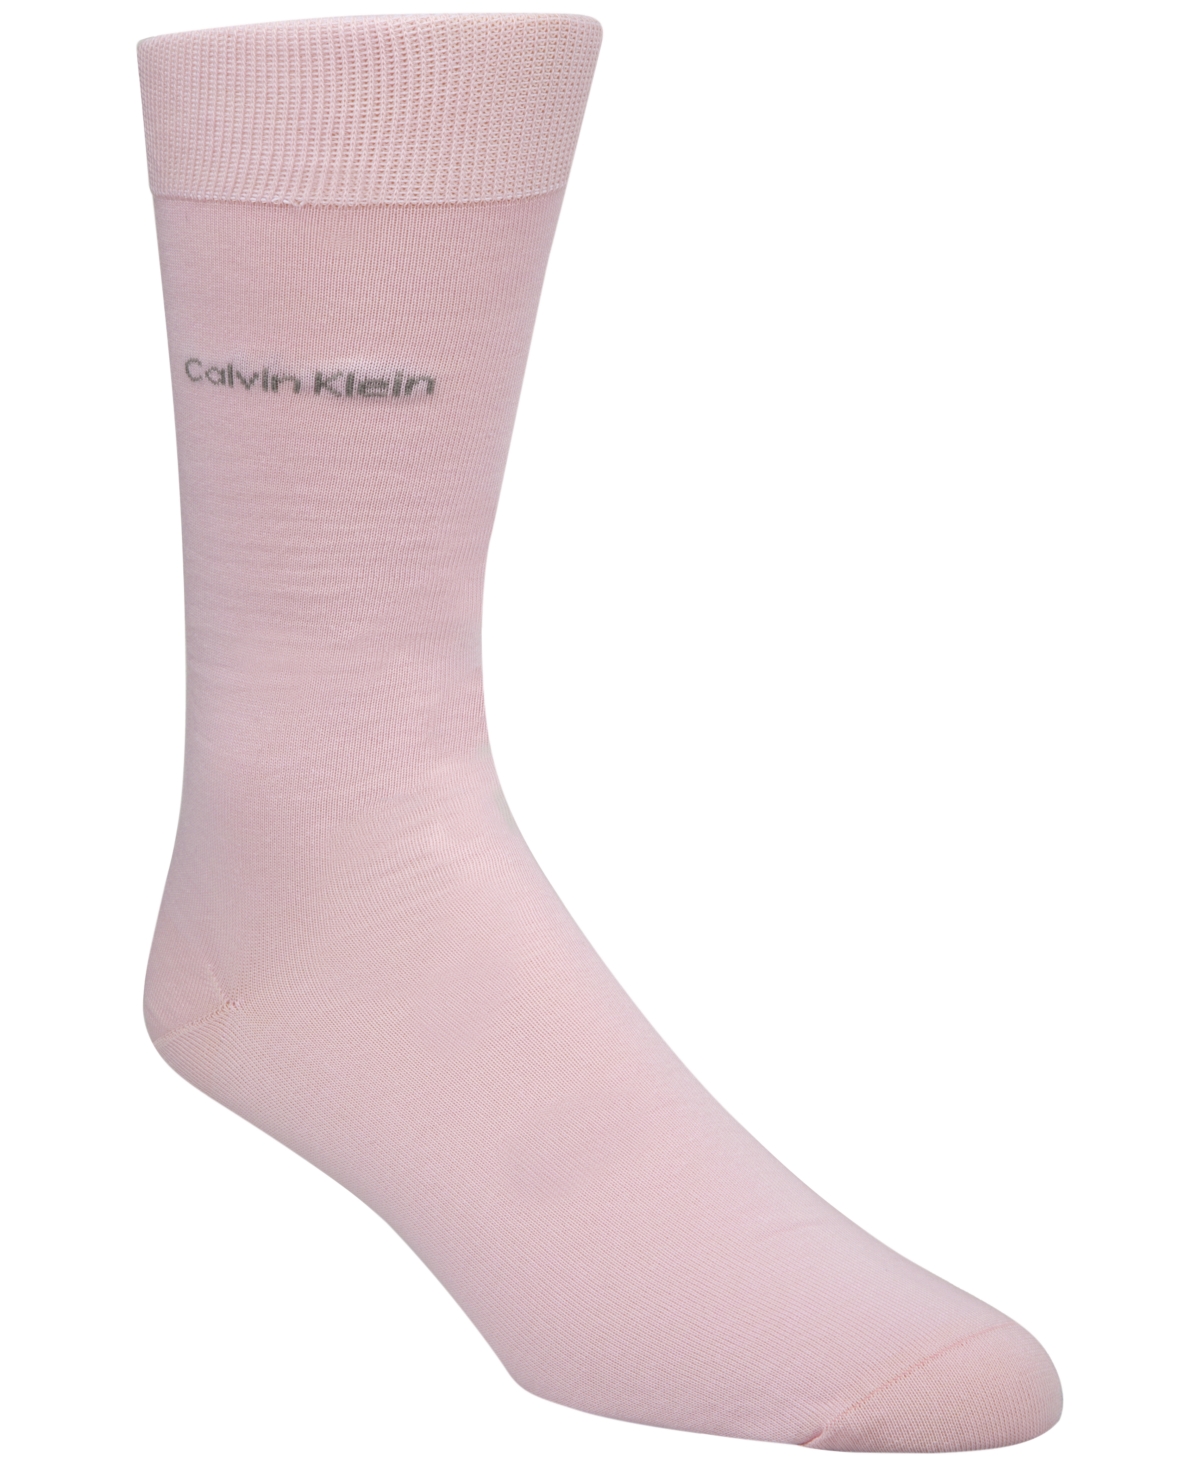 Men's Socks, Giza Cotton Flat Knit Crew - Rosa Pink